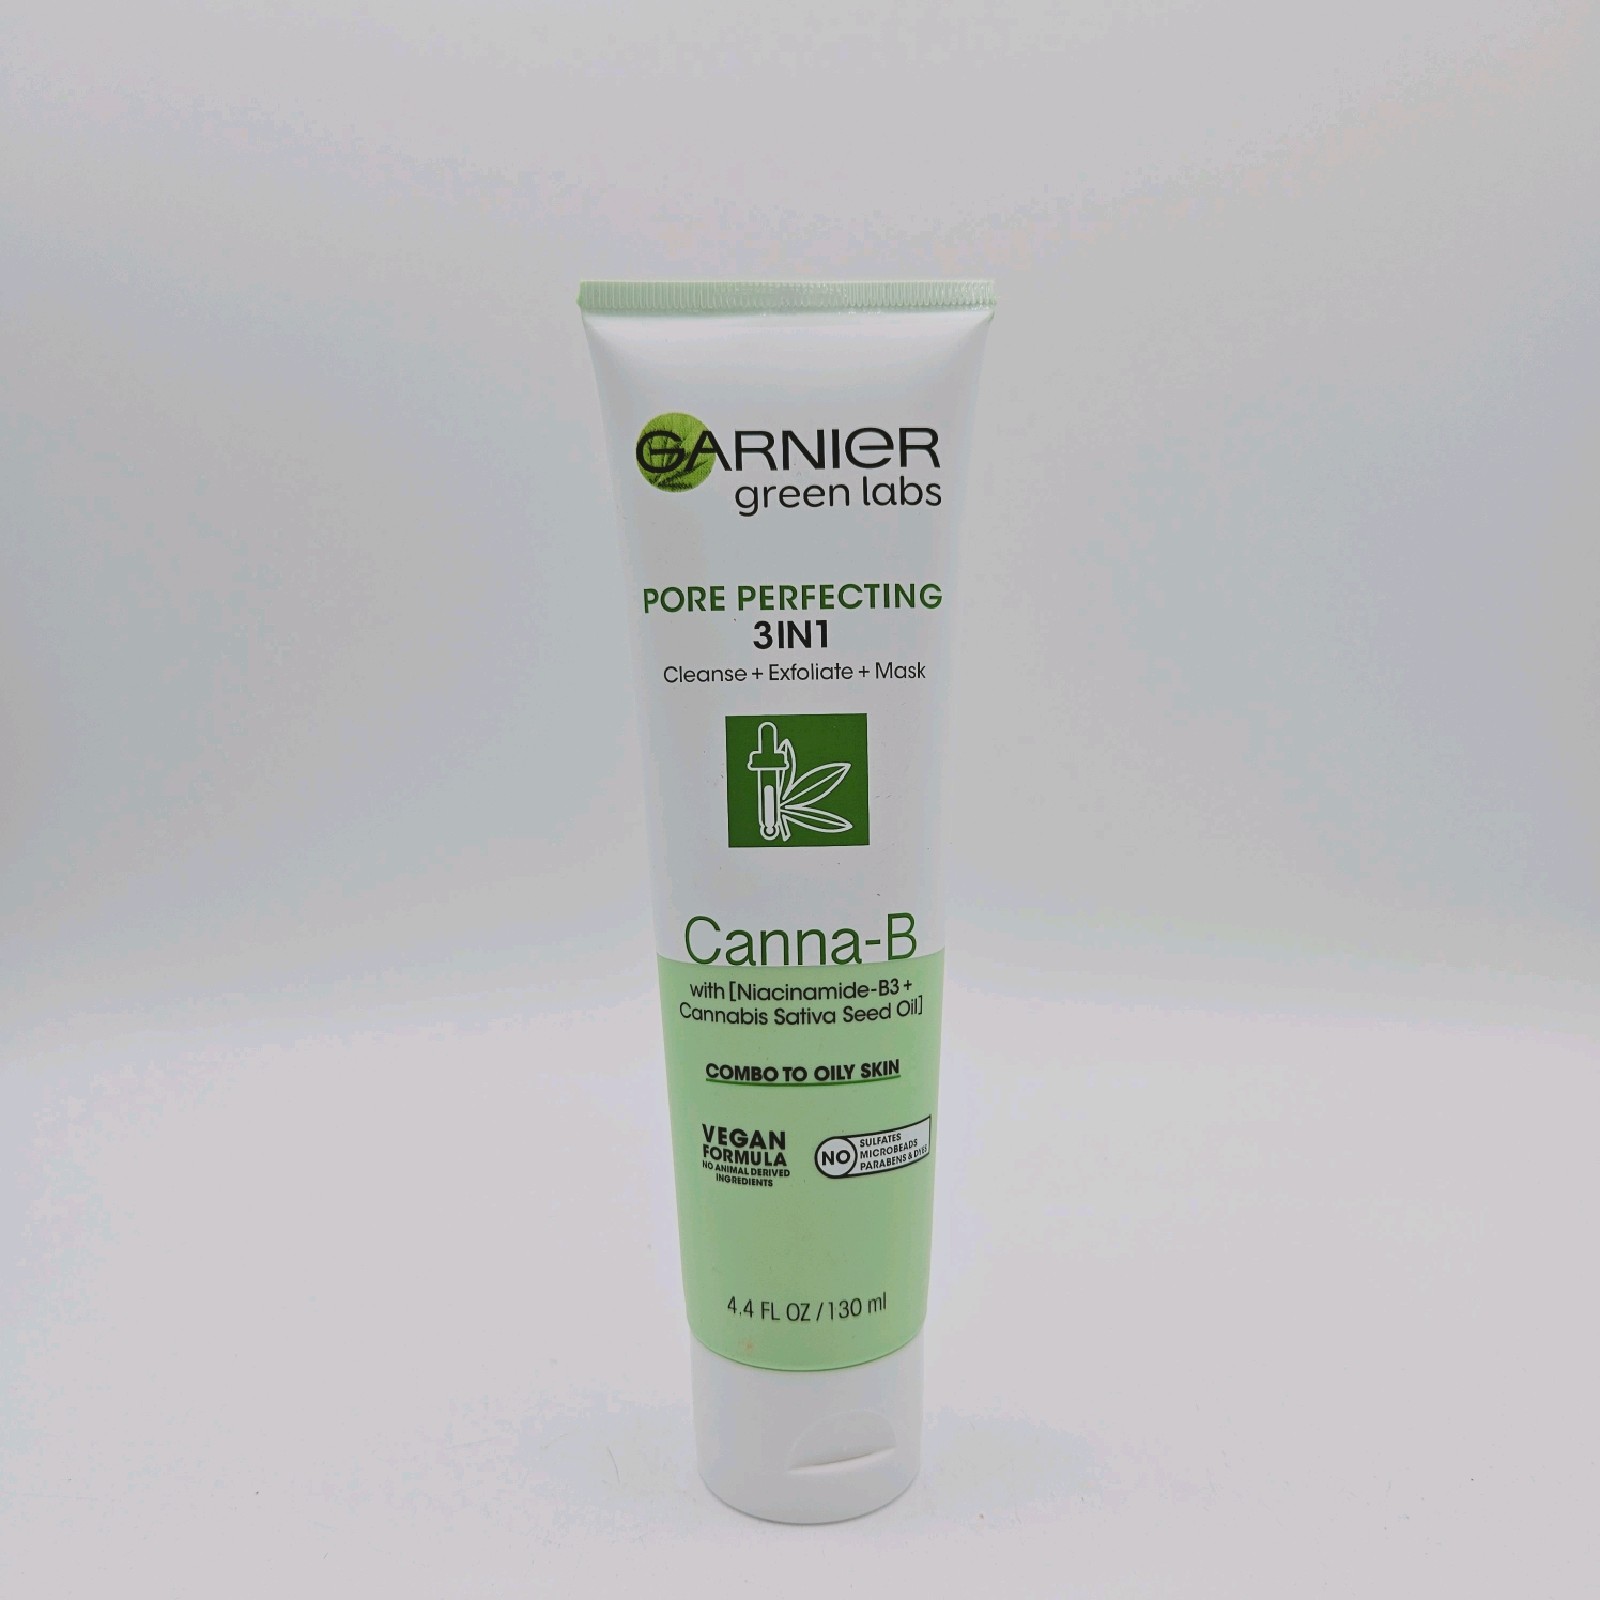 Garnier Green Labs Canna-B Pore Perfecting 3-in-1 Face Wash + Exfoliator + Mask 4.4 OZ